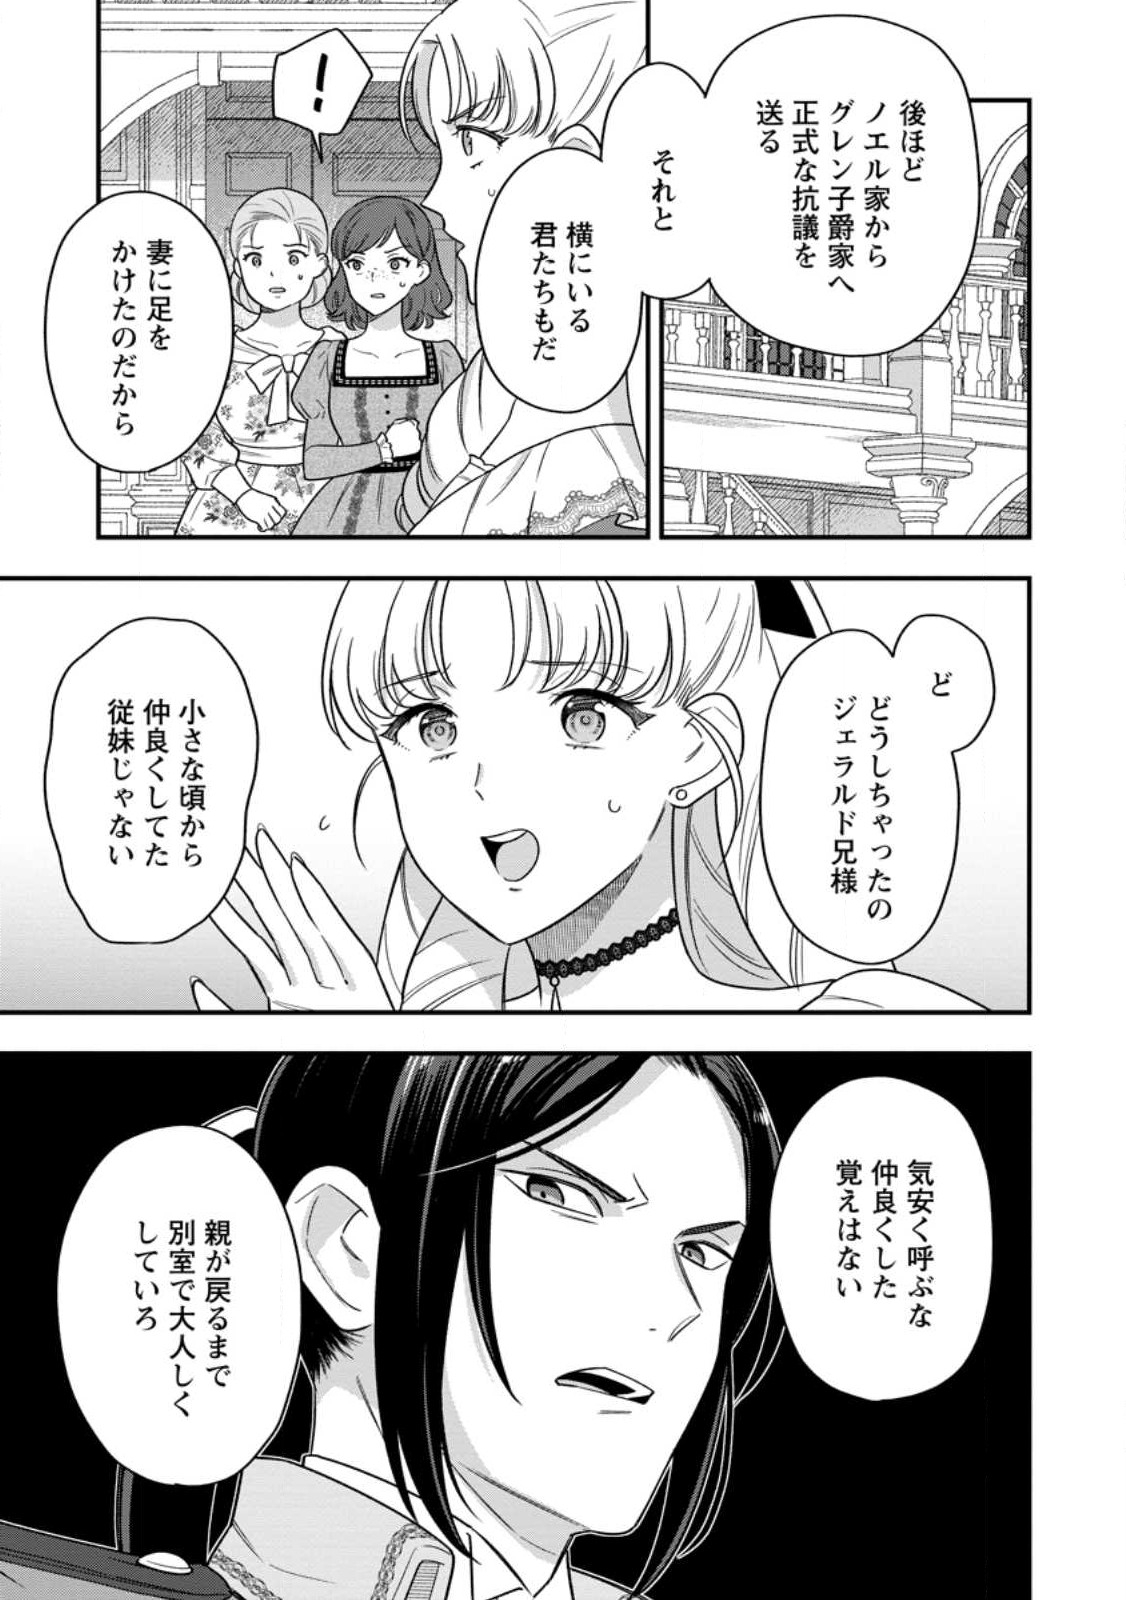 Aisanai to Iwaremashite mo - Chapter 12.2 - Page 9